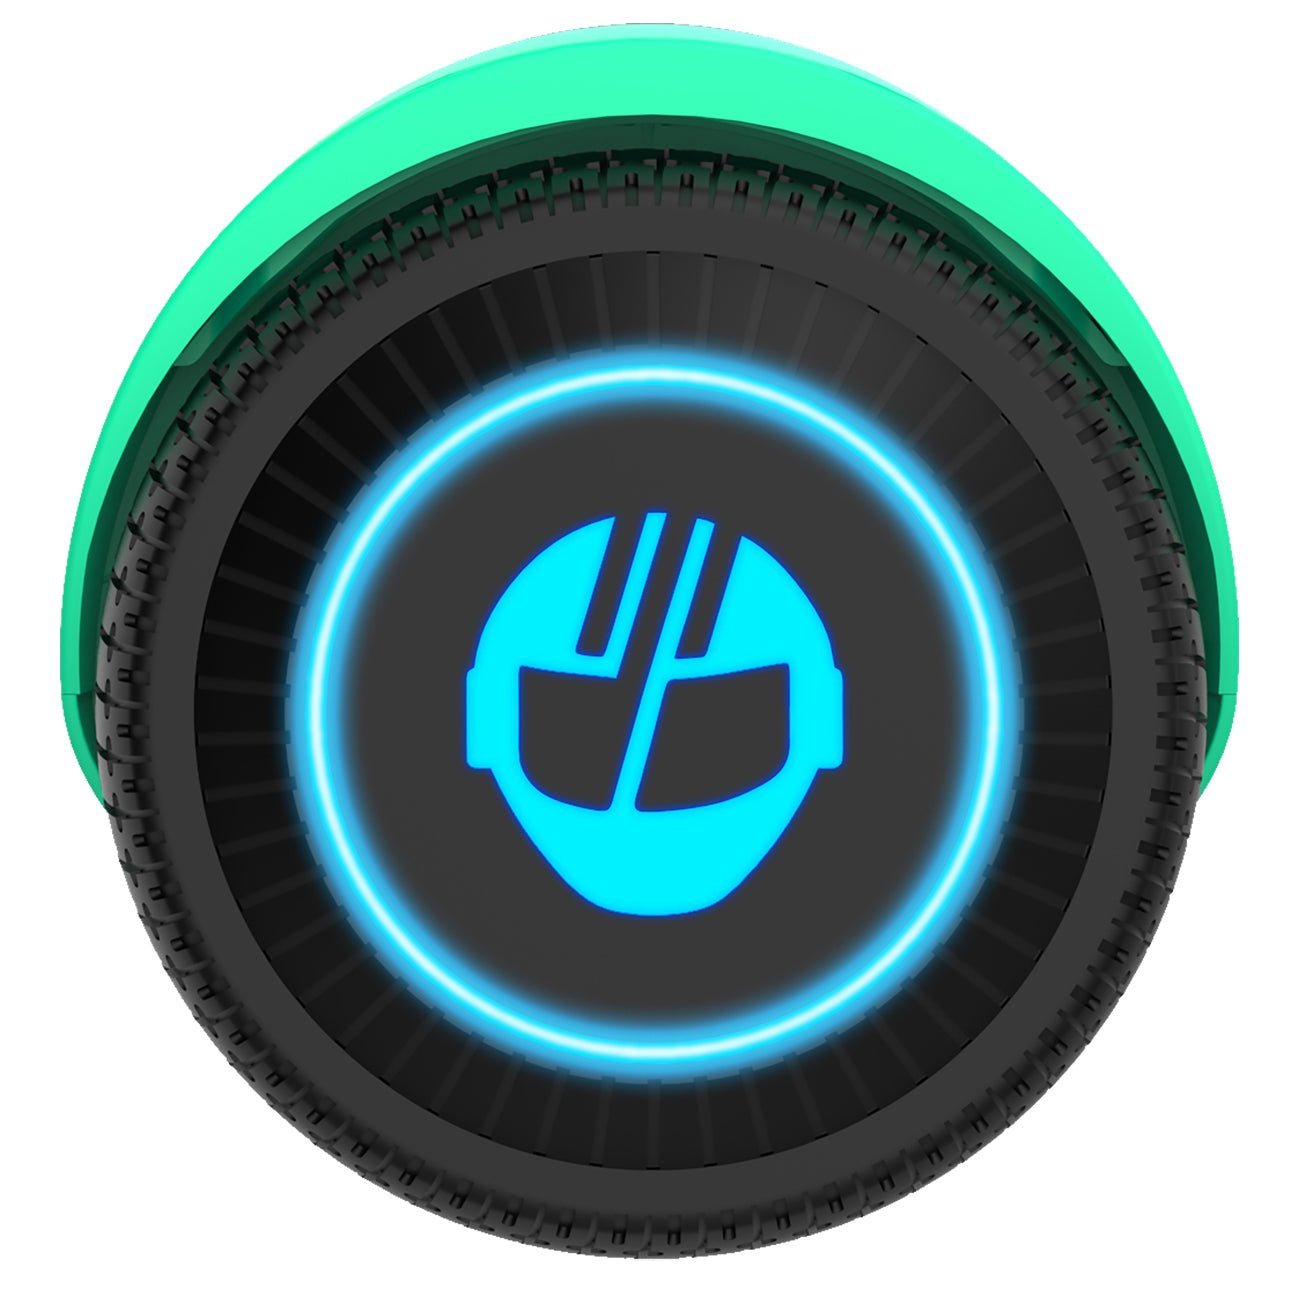 Nova Refurbished LED Self Balancing Hoverboard 6.5" - GOTRAX